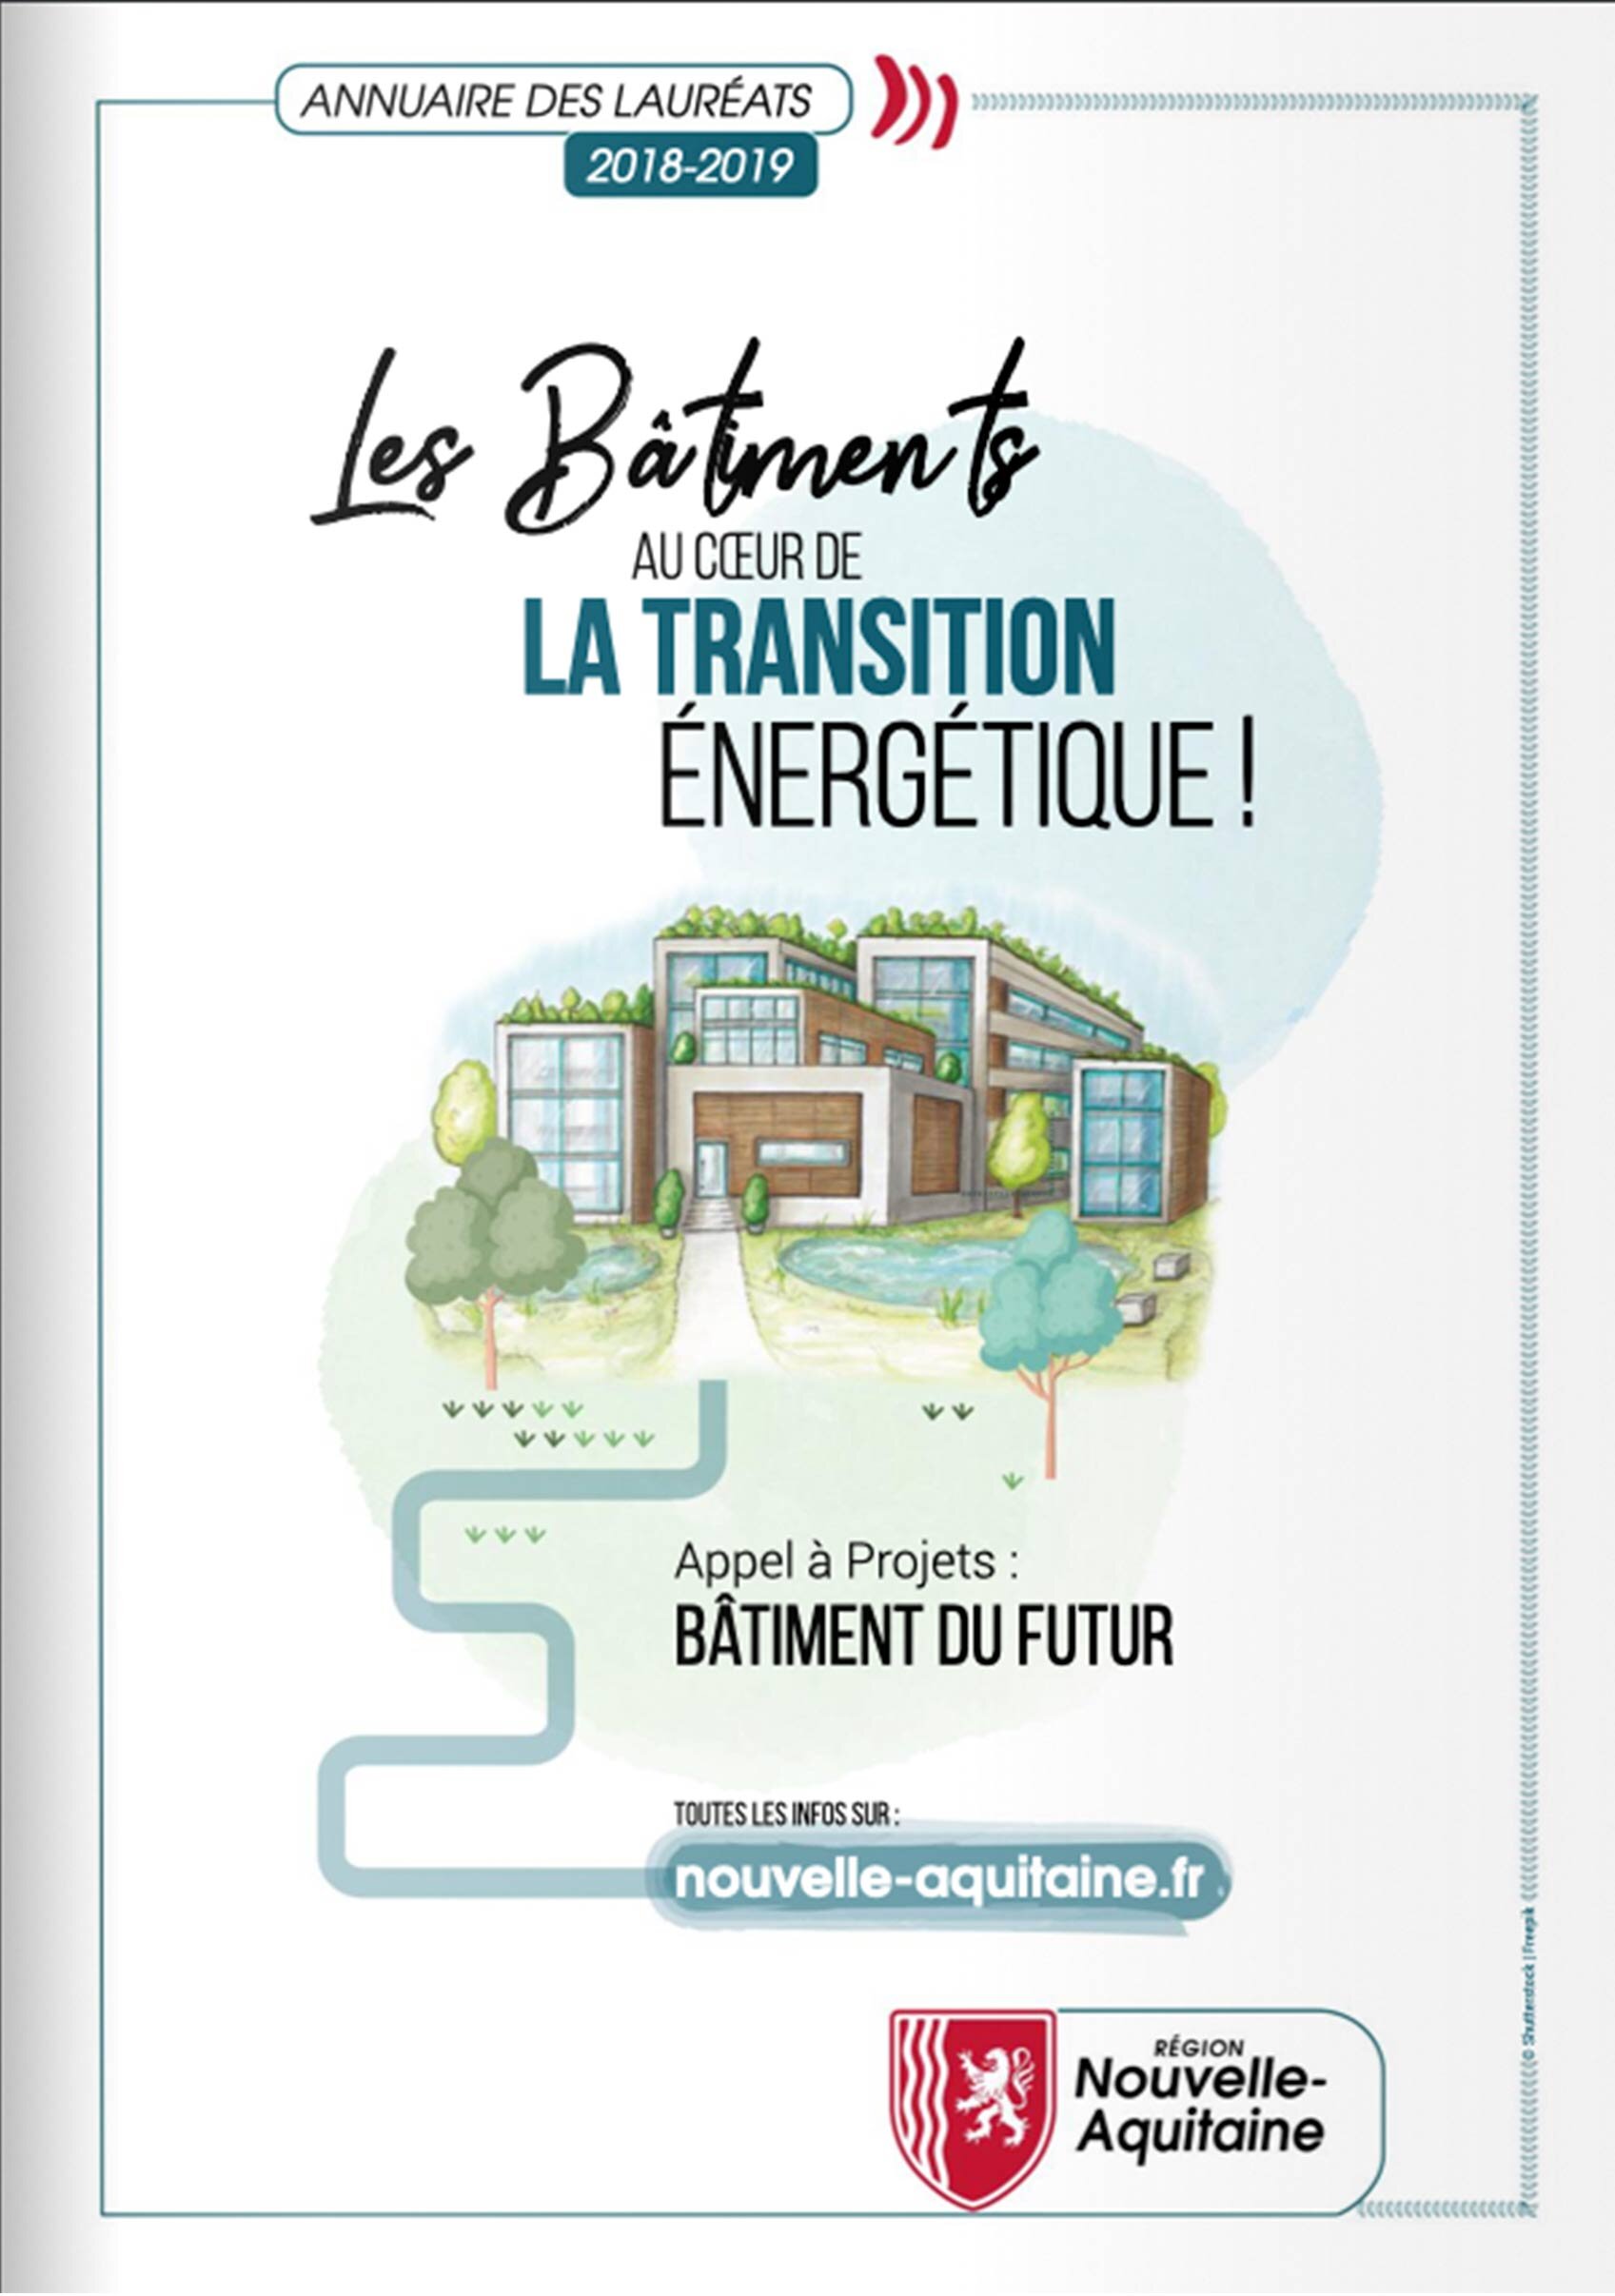 2019-BatimentdufutureNouvelleAquitaine-publicationSimple-alterlab.jpg